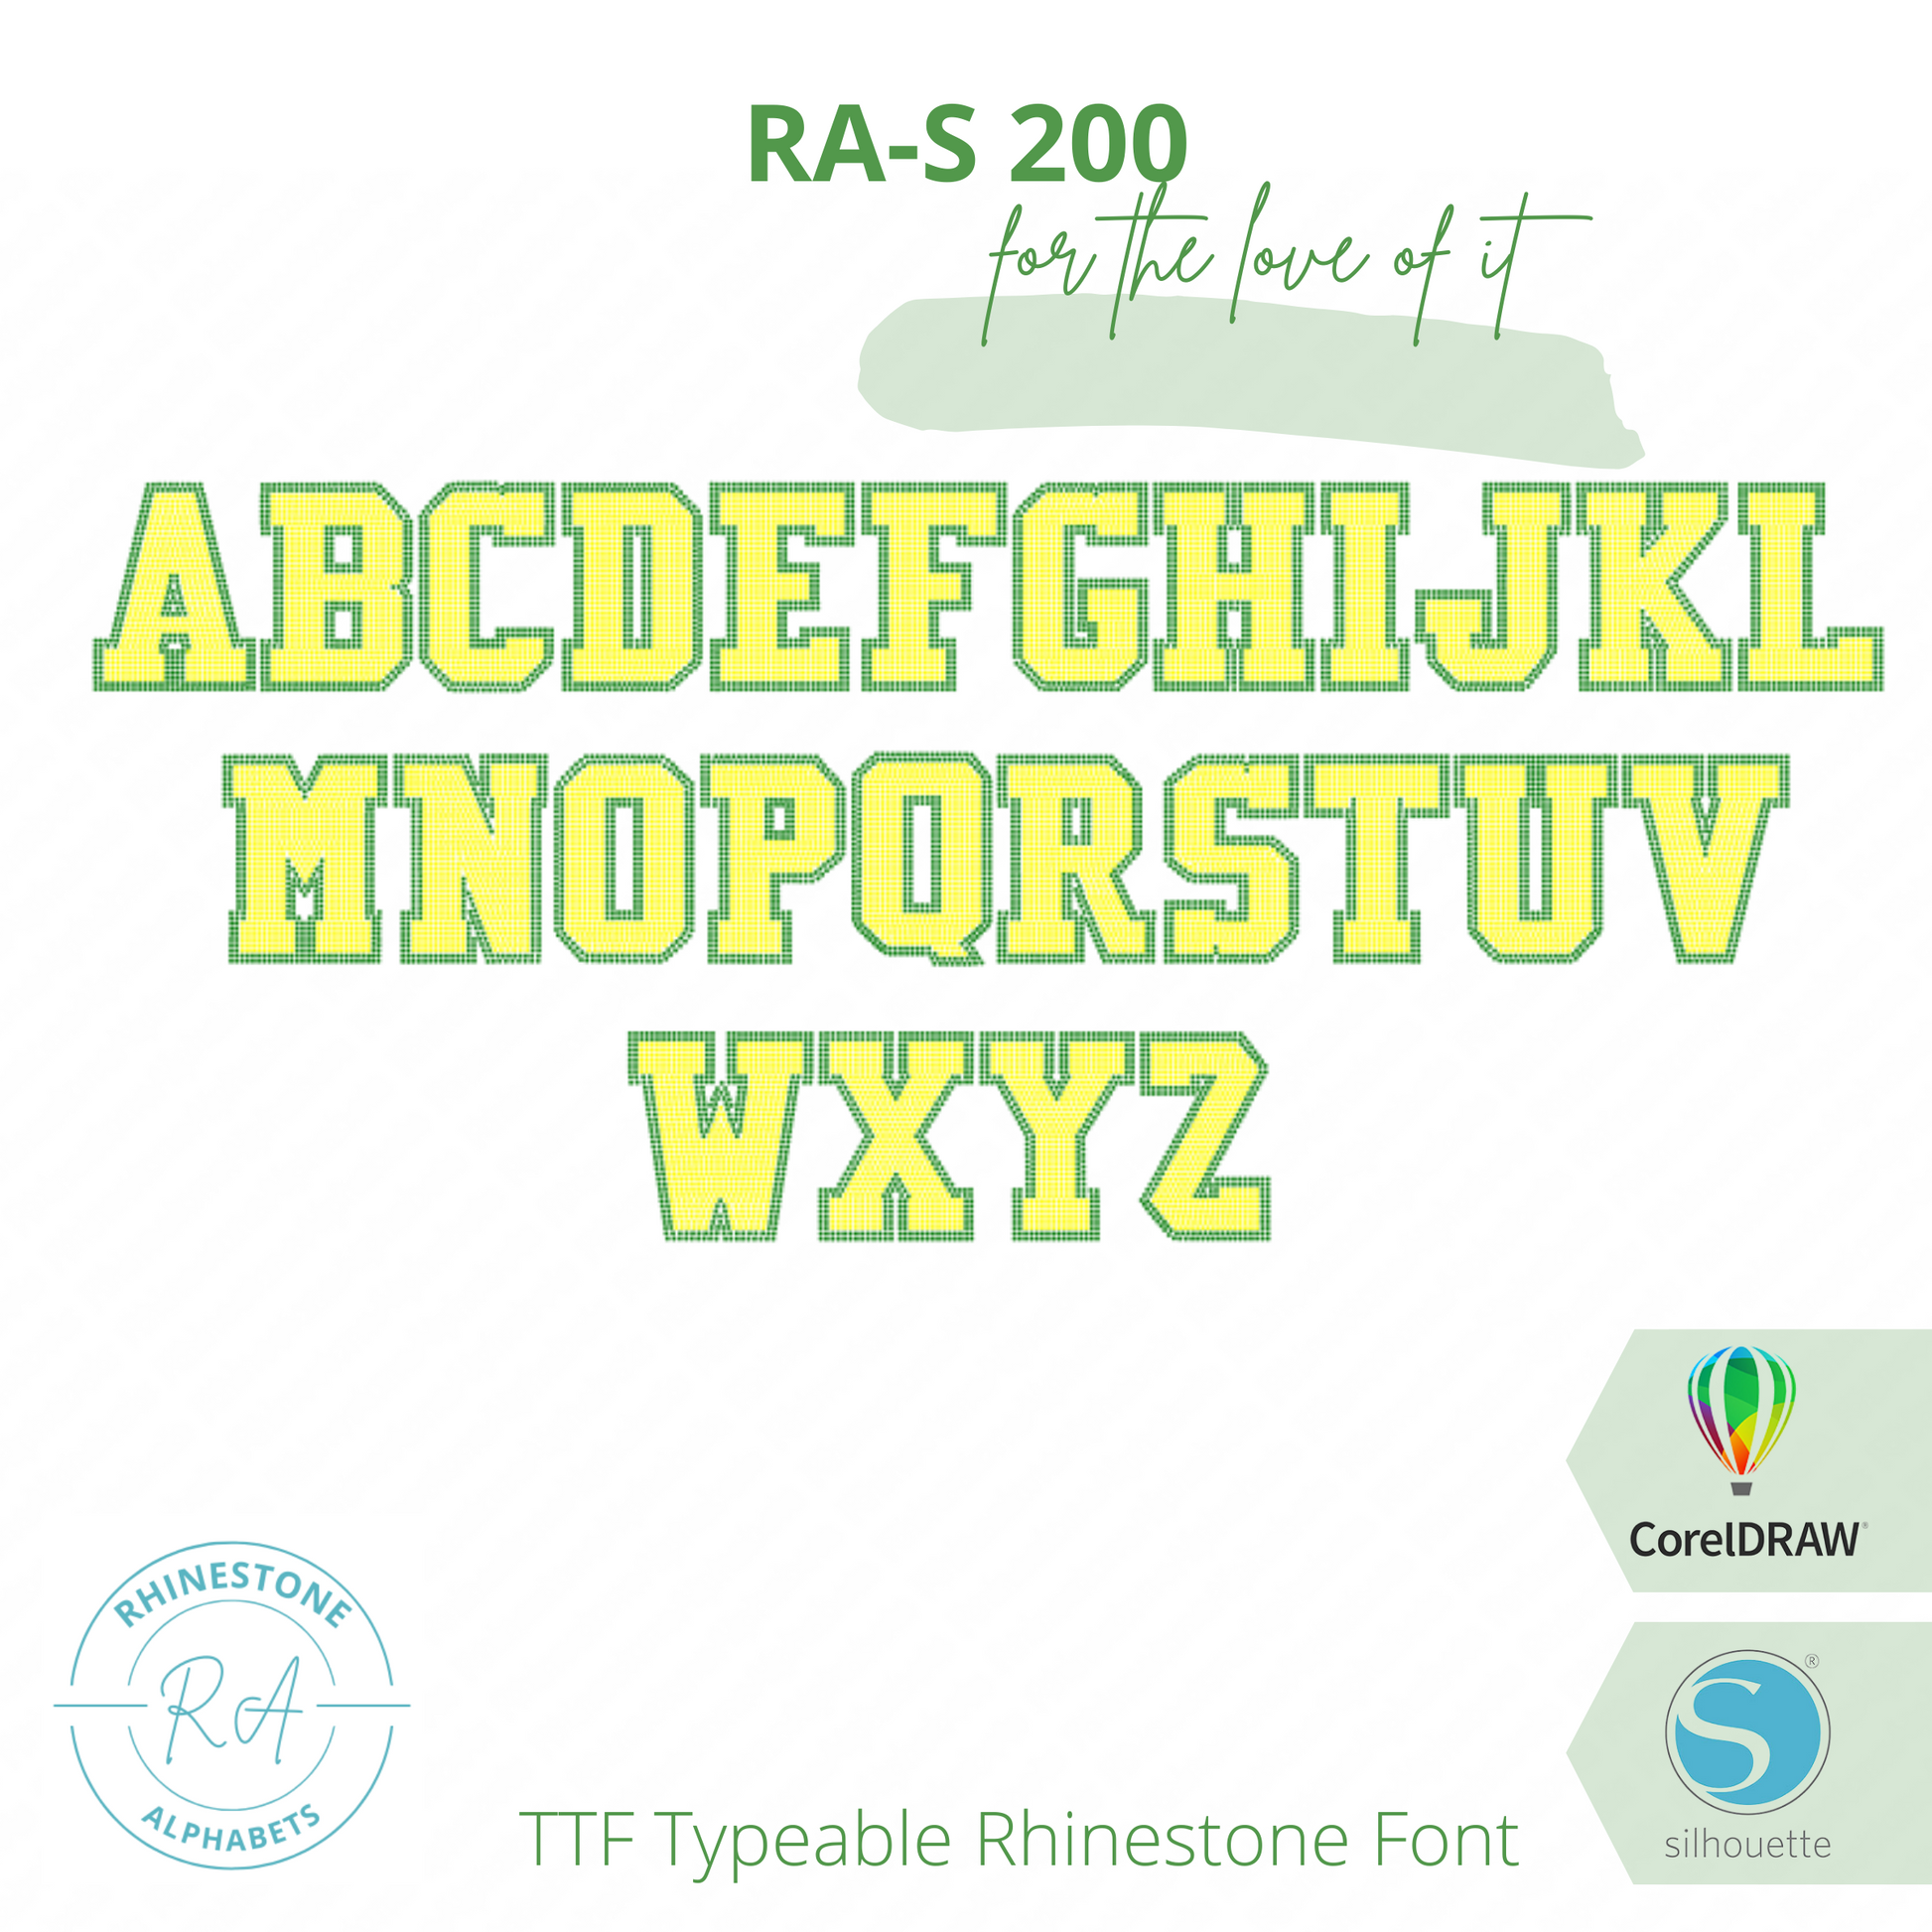 RA-S 200 Combo - RhinestoneAlphabets